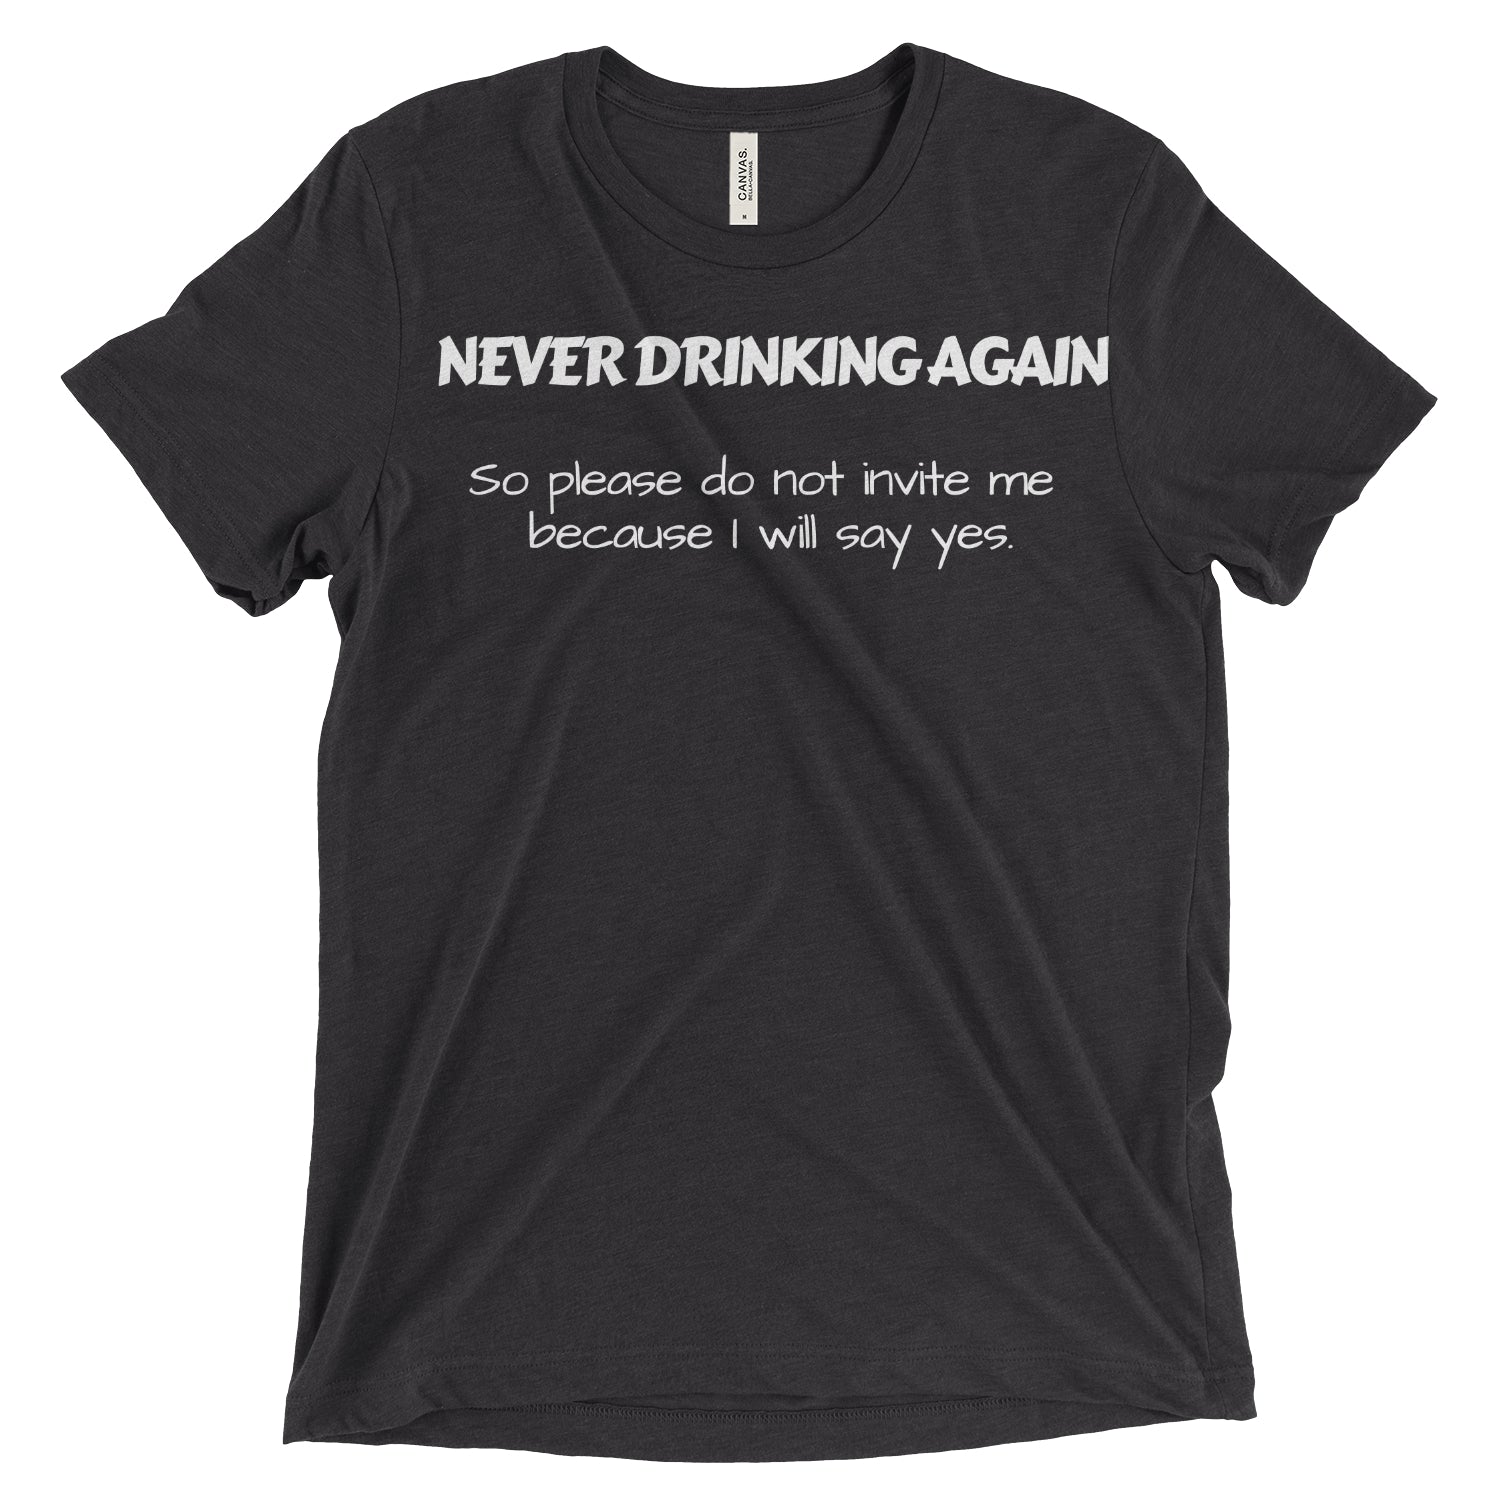 NEVER DRINKING AGAIN SHIRT